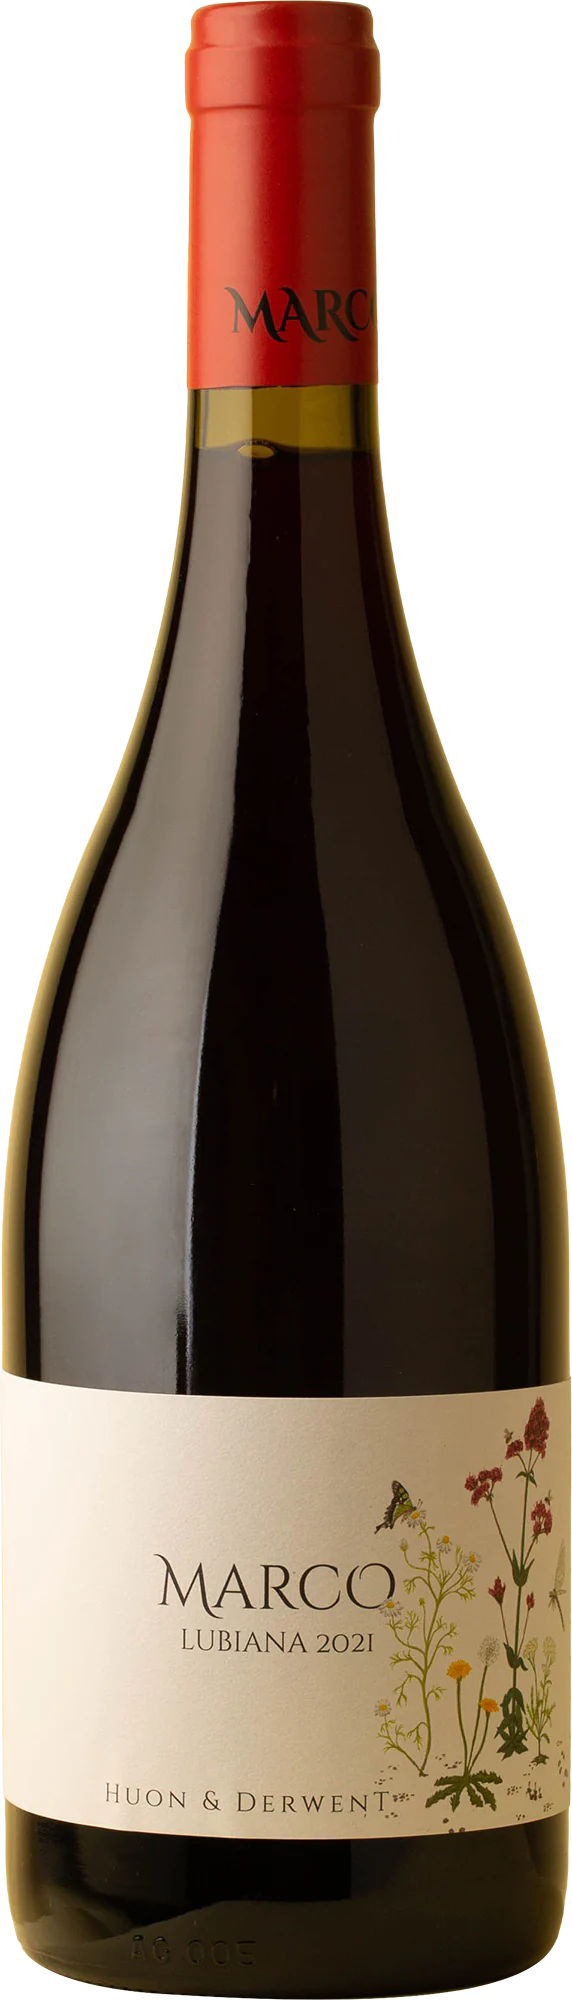 Marco Lubiana Pinot Noir 2021